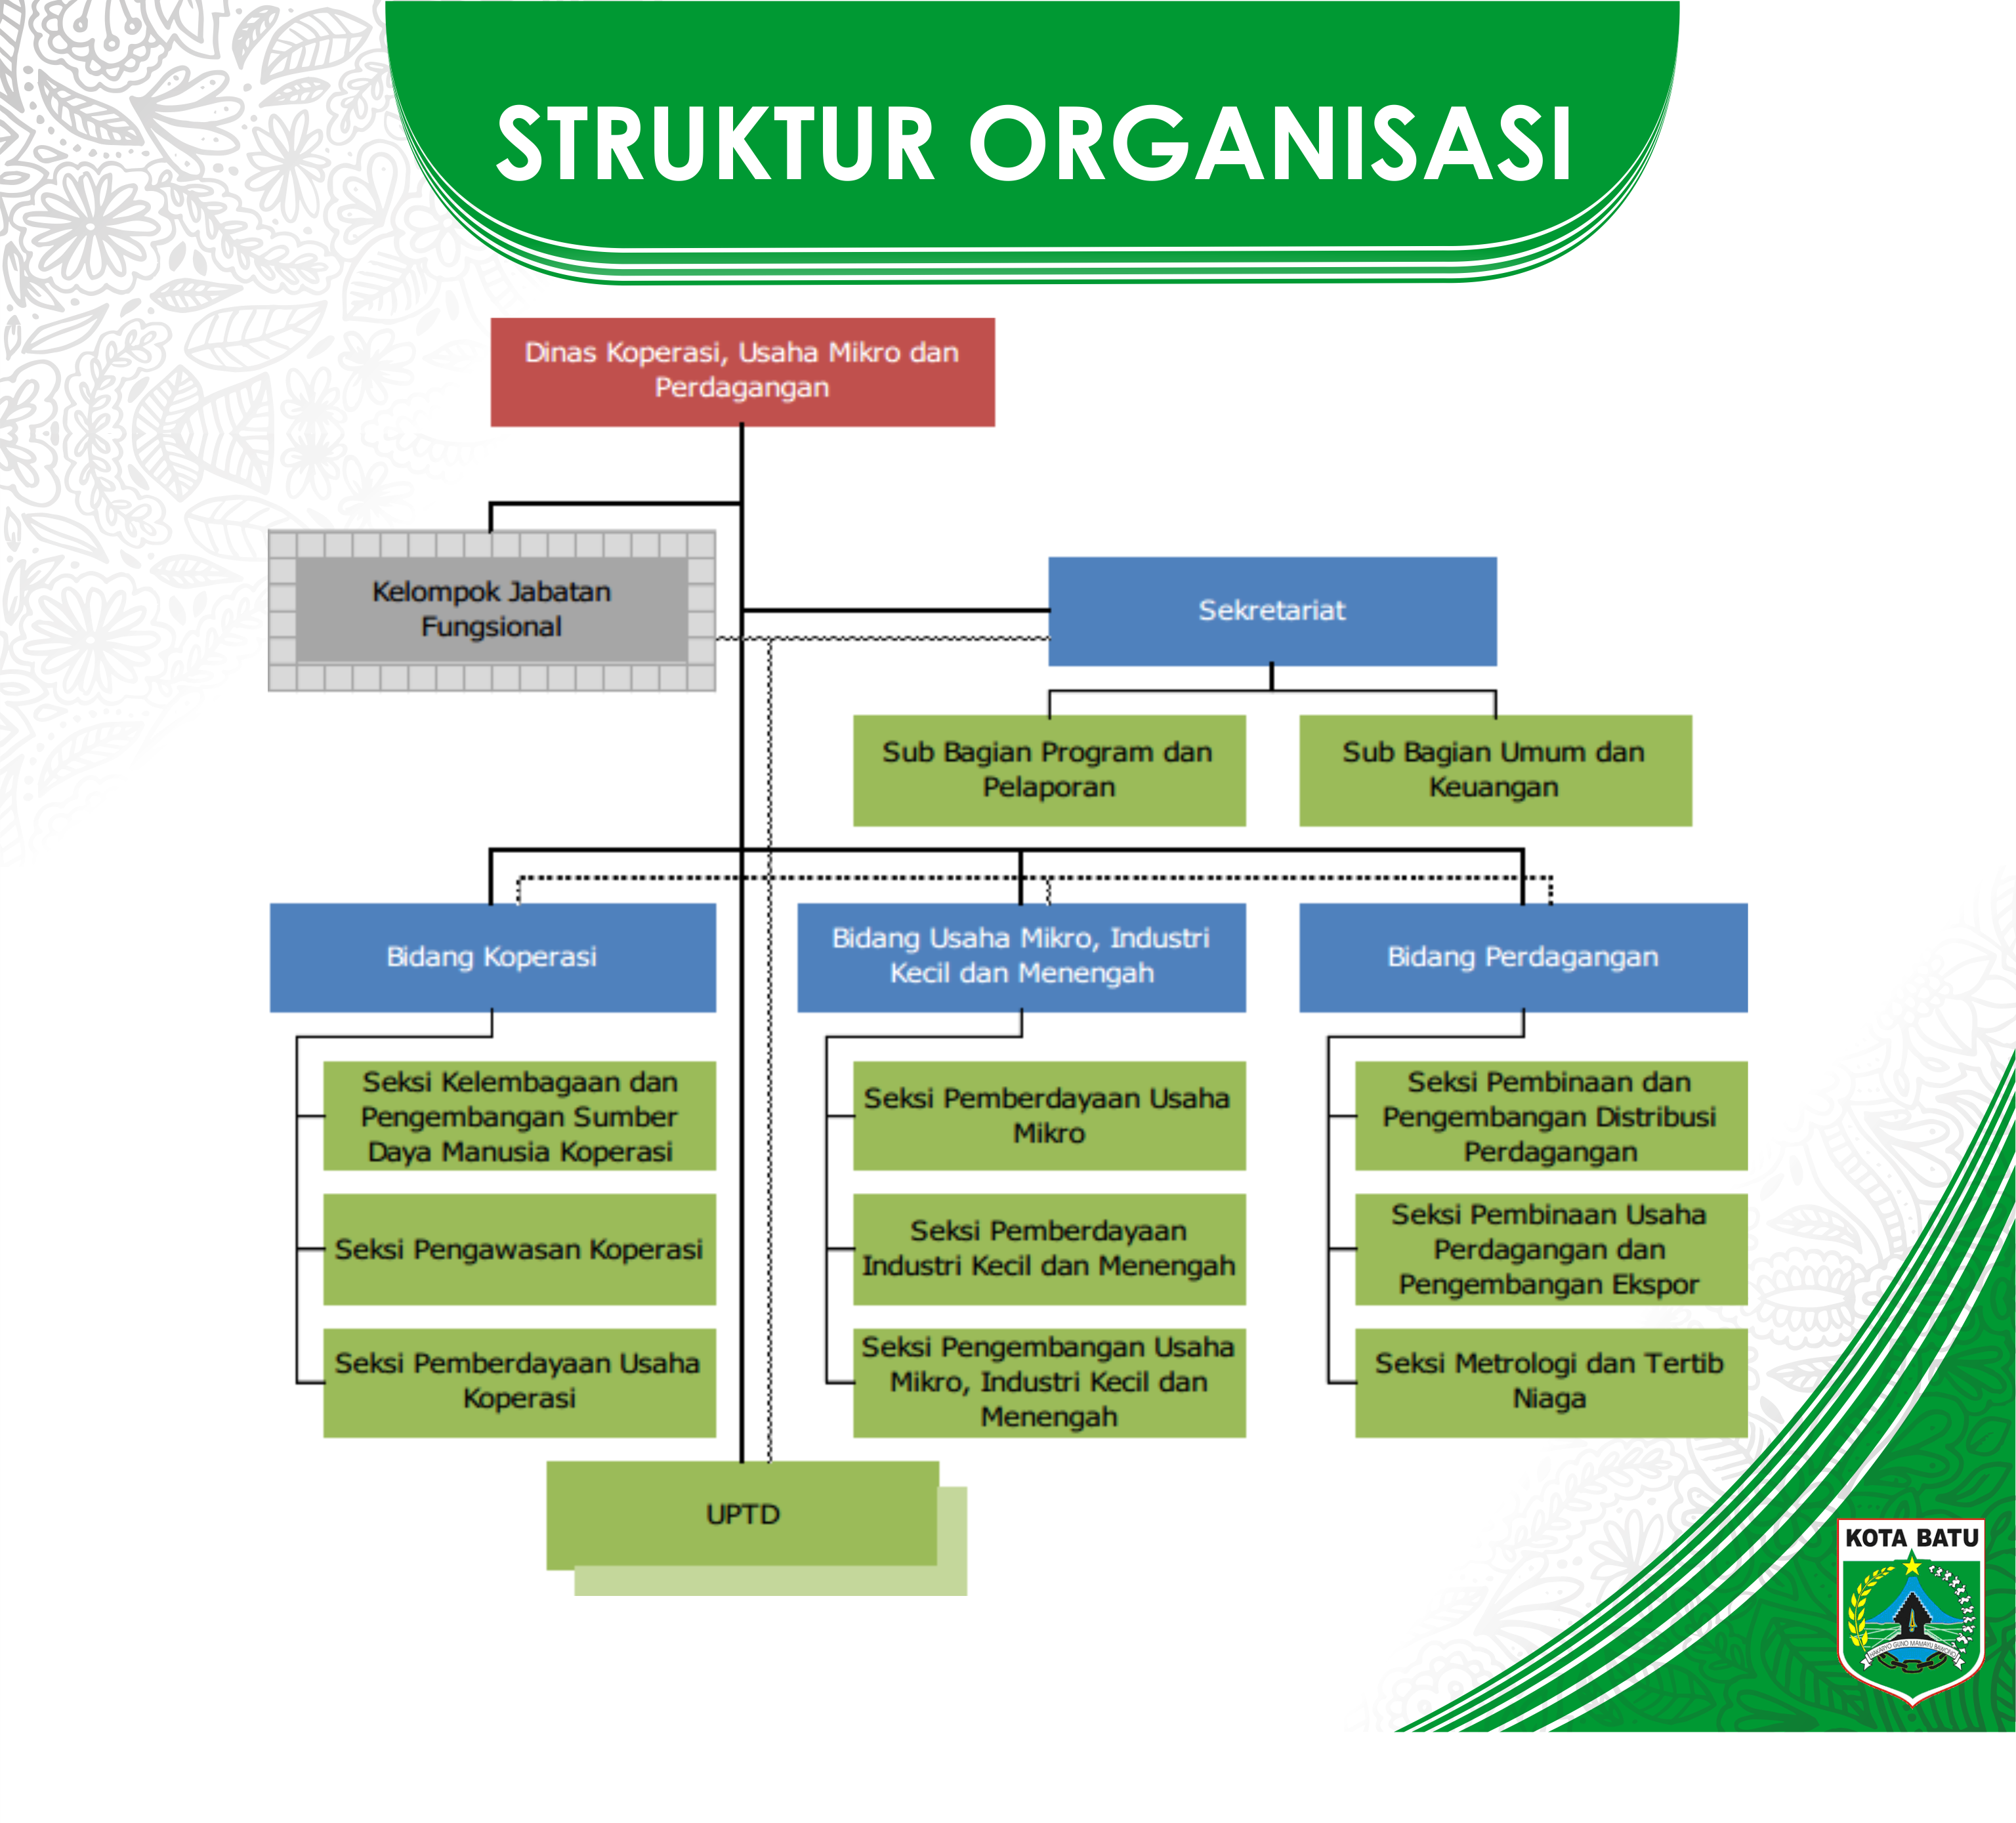 Struktur Organisasi Diskumdag Kota Batu